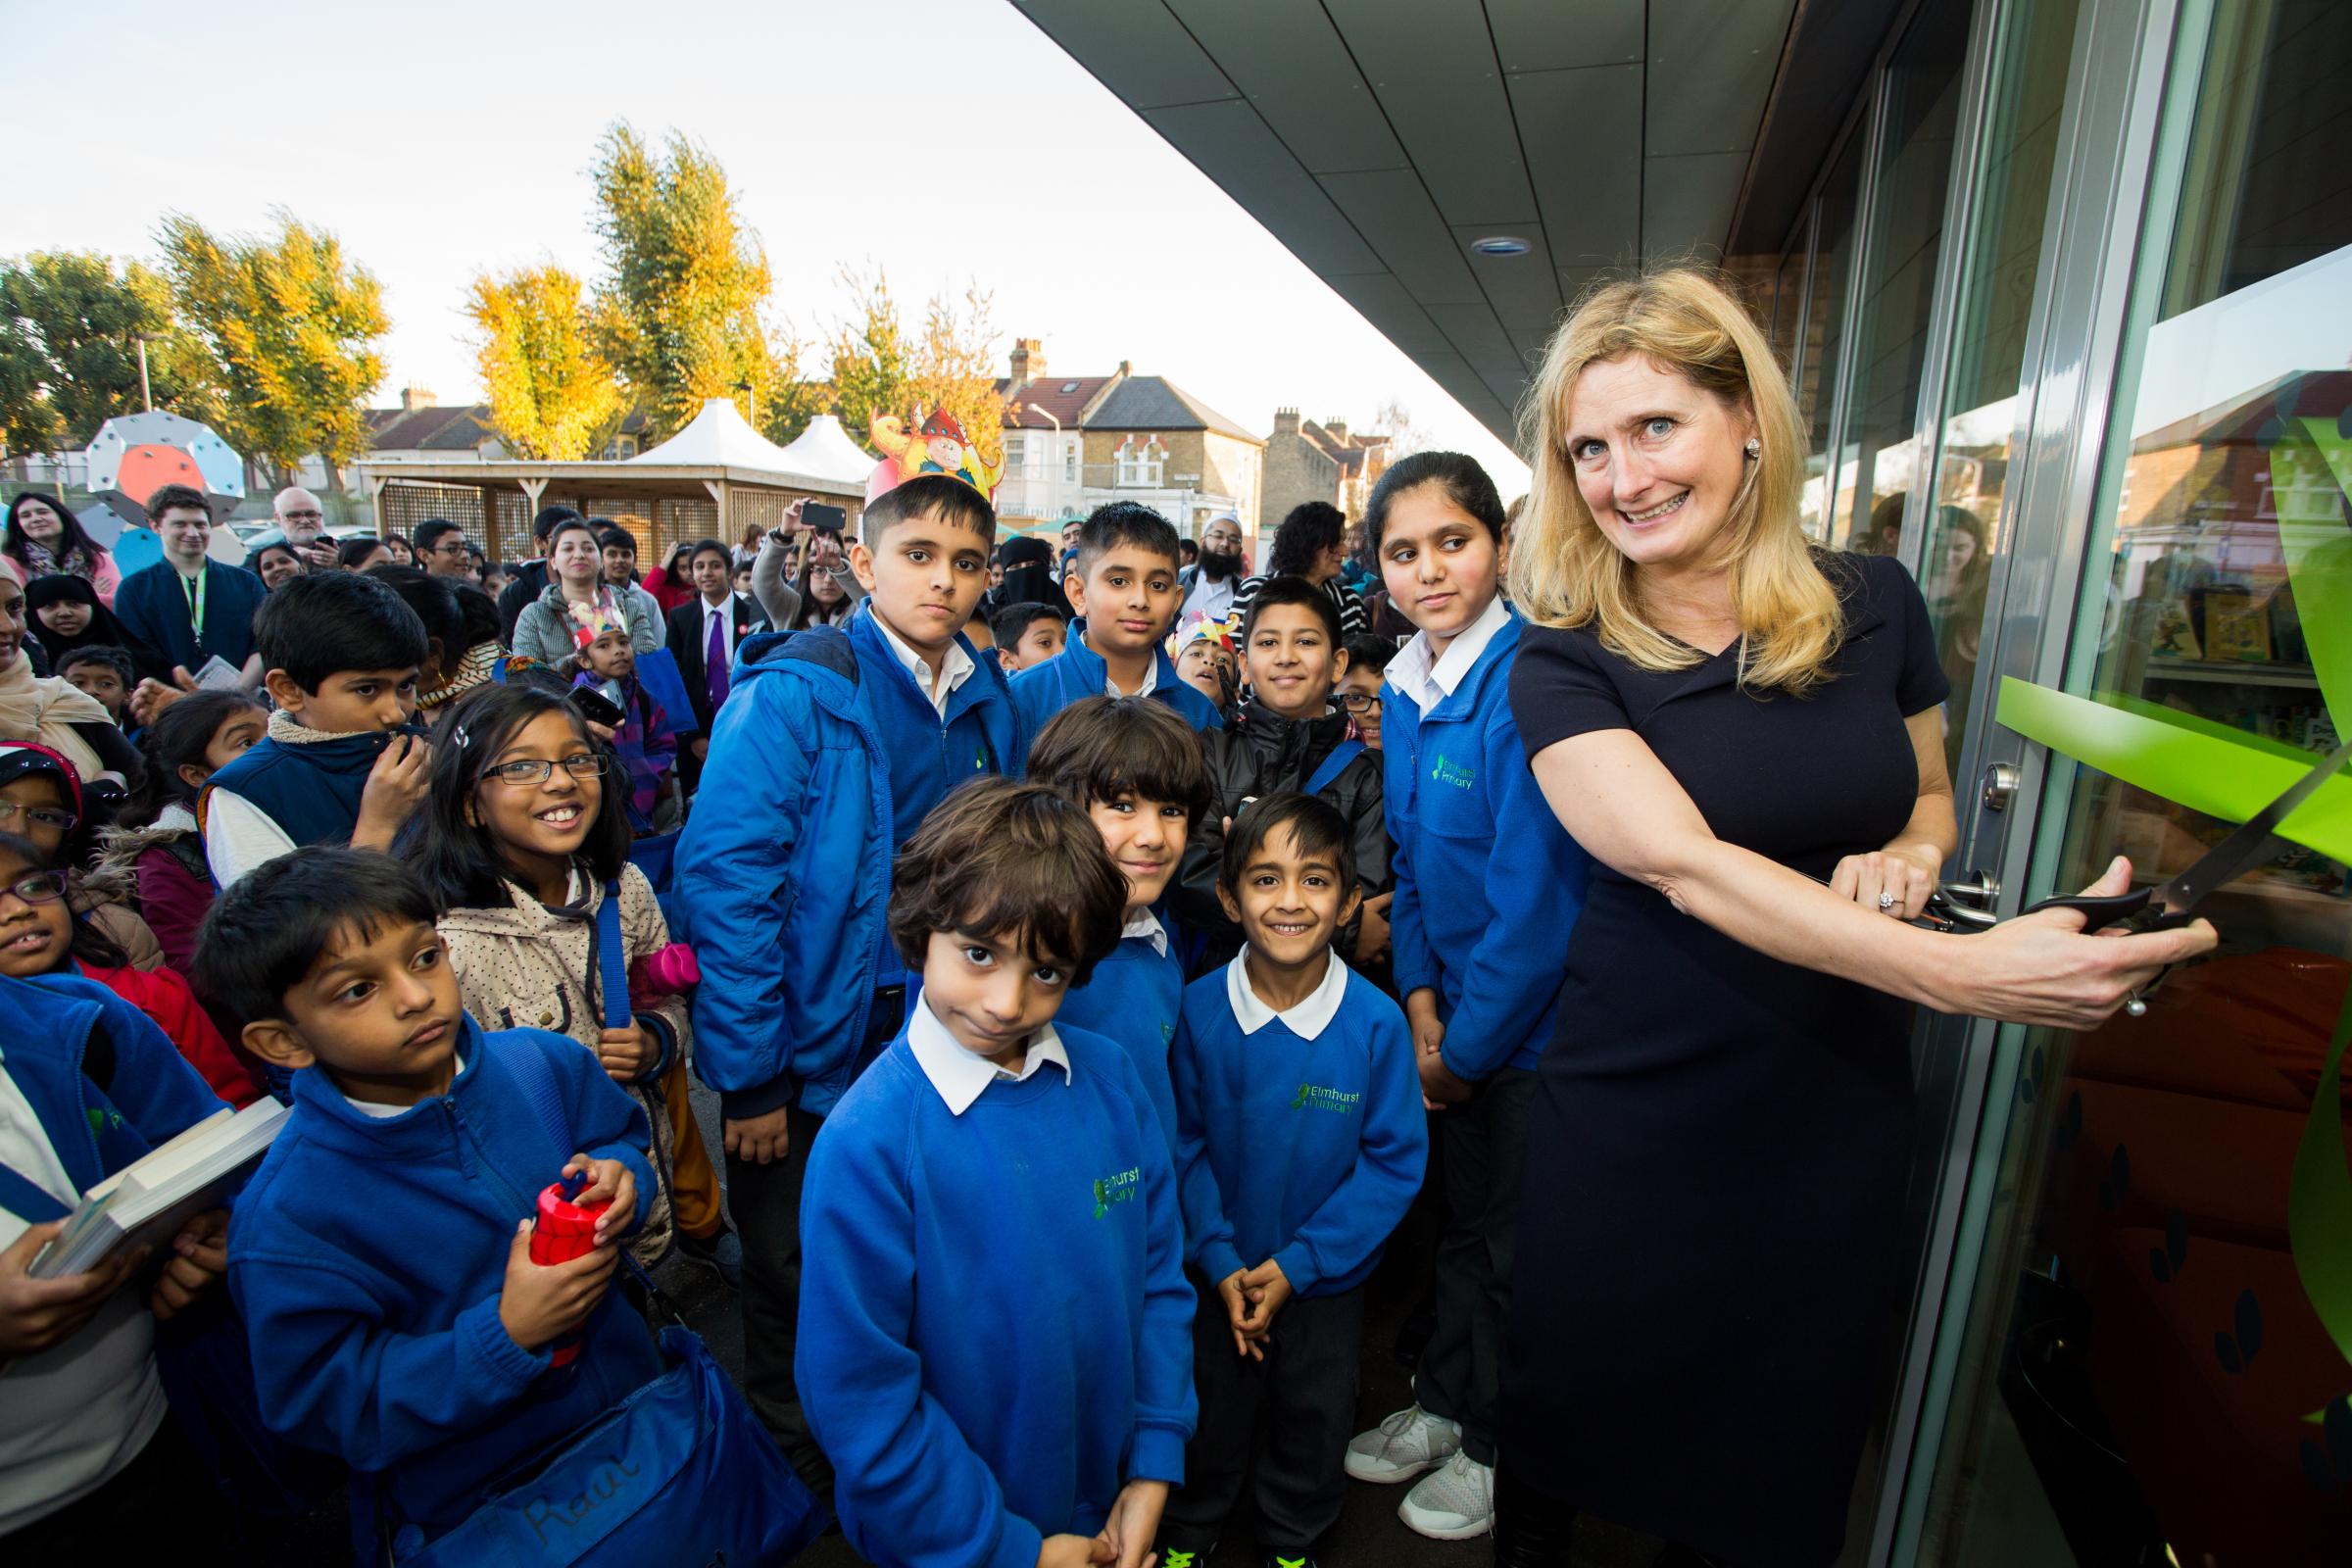 Cressida Cowell has partnered with six schools across England